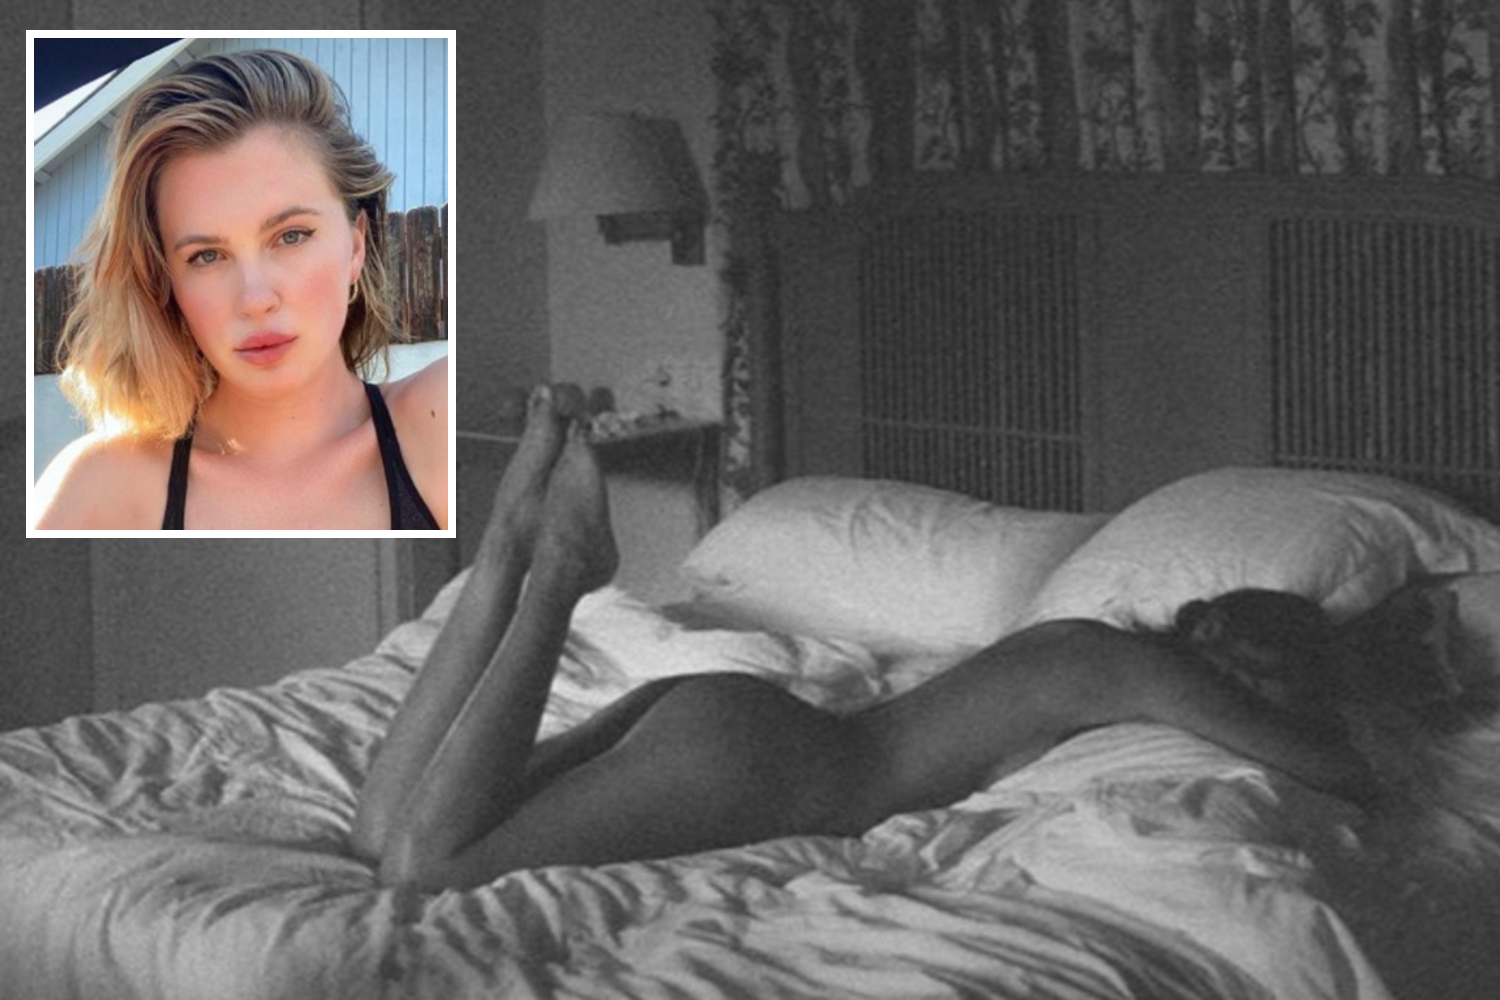 daniel brask recommends ireland baldwin nude photo shoot pic